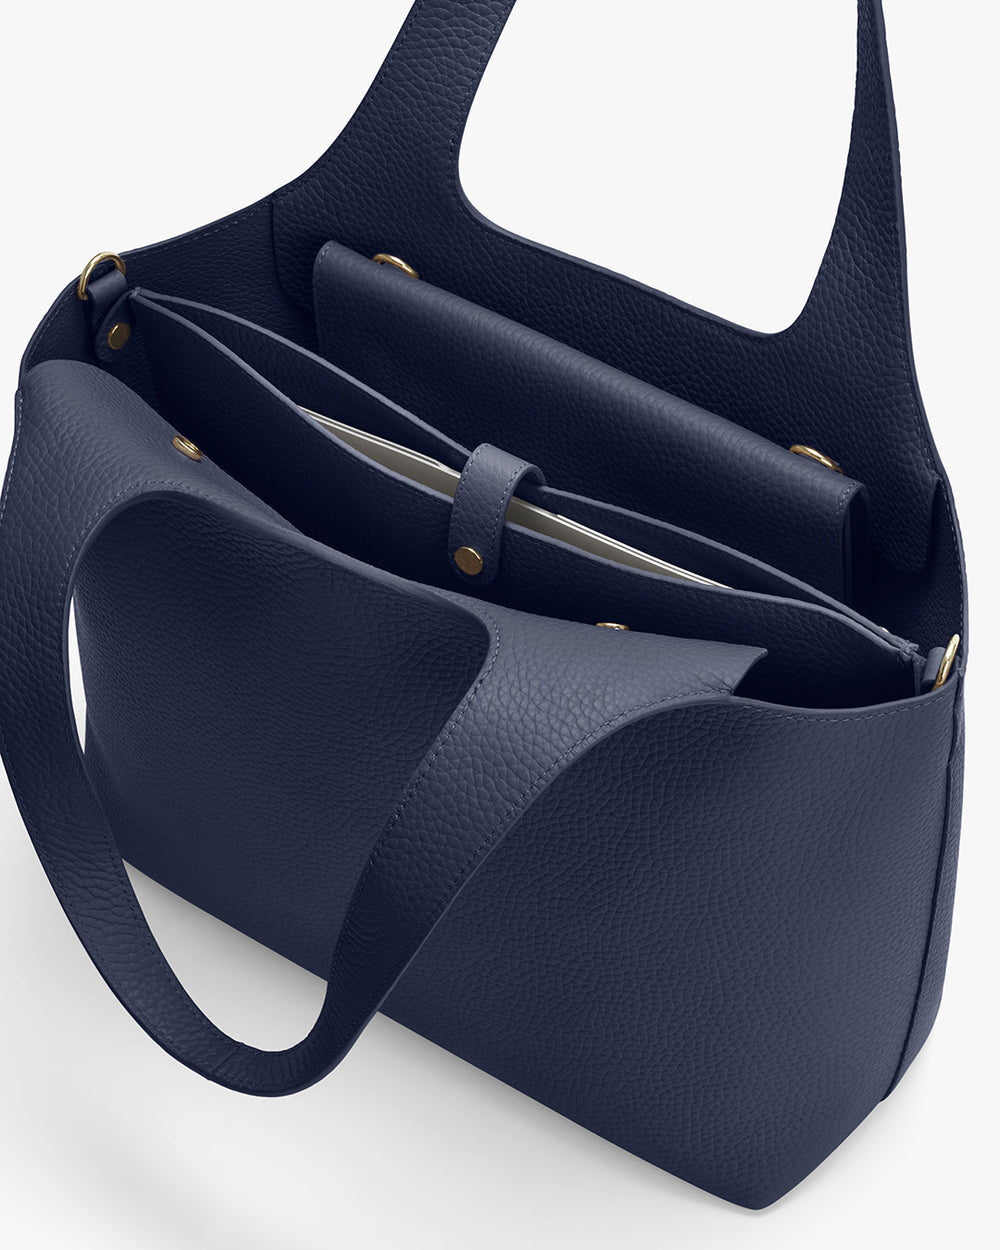 Open handbag with two handles and an inner zipper pocket.